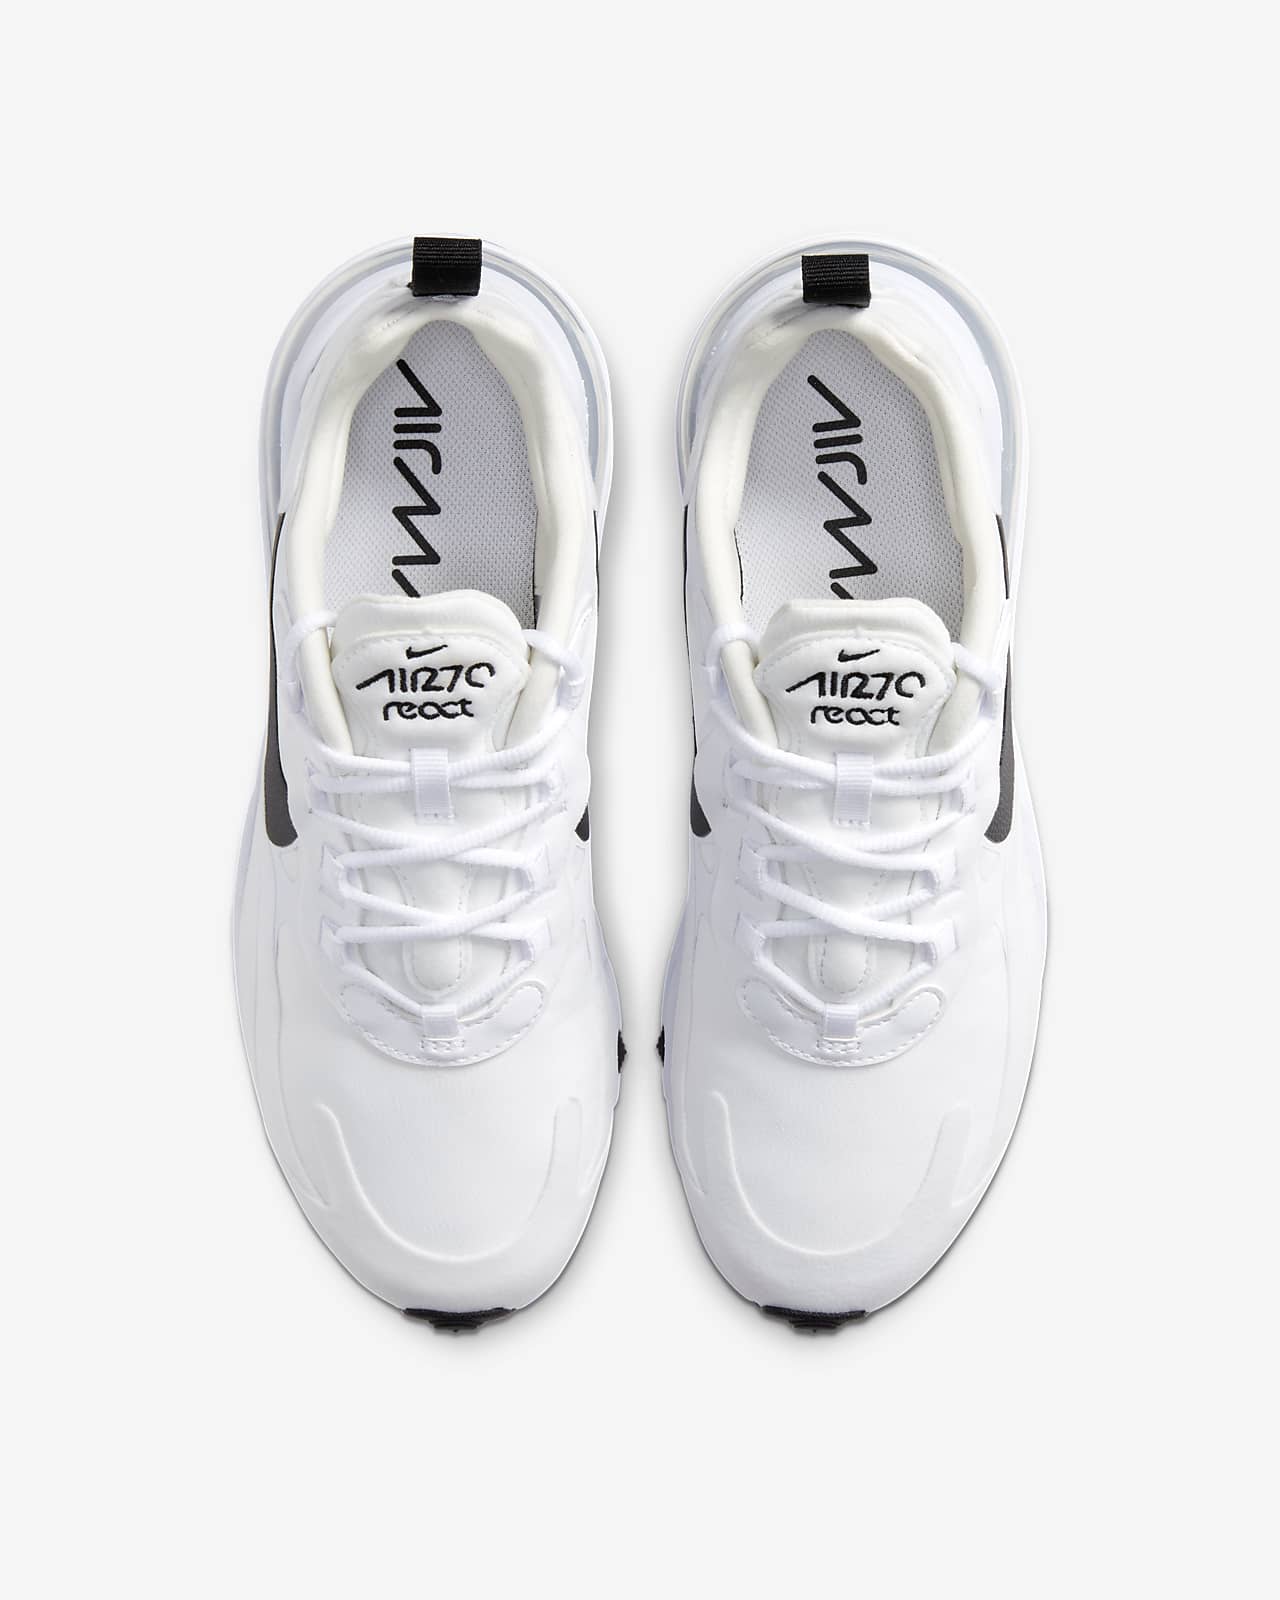 nike women's air max 270 react shoes